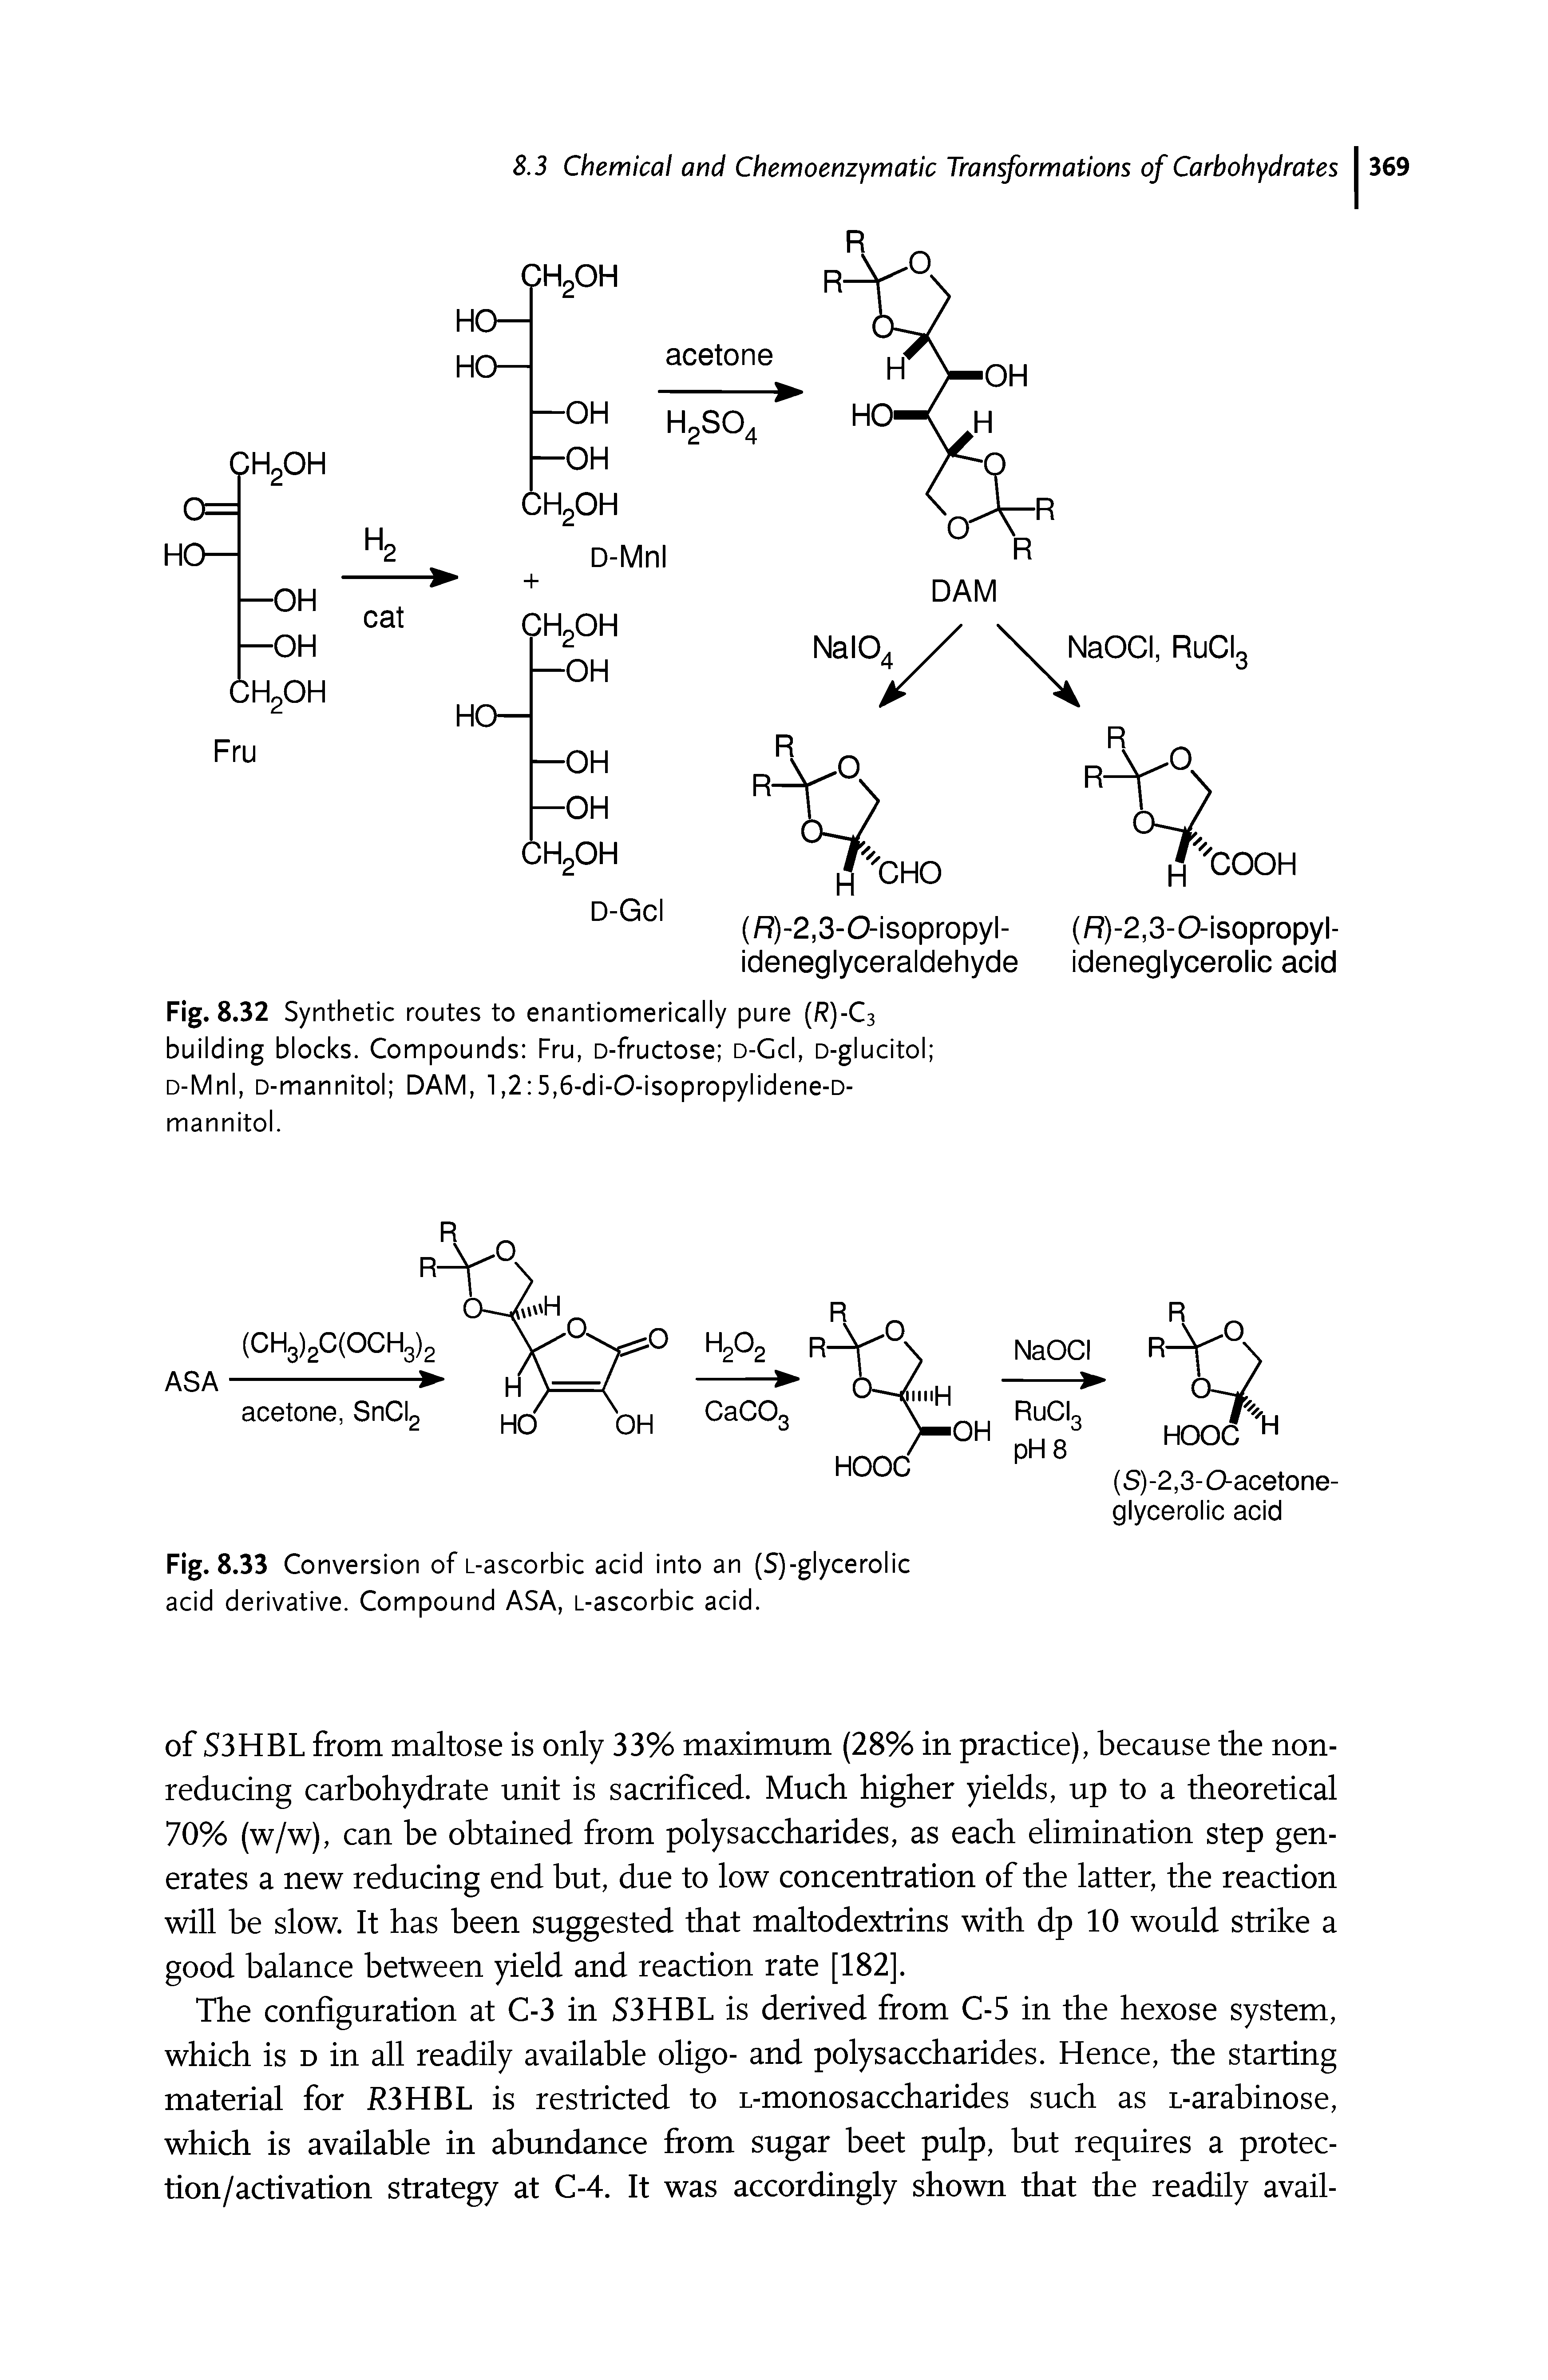 Fig. 8.33 Conversion of L-ascorbic acid into an (S)-glycerolic acid derivative. Compound ASA, L-ascorbic acid.